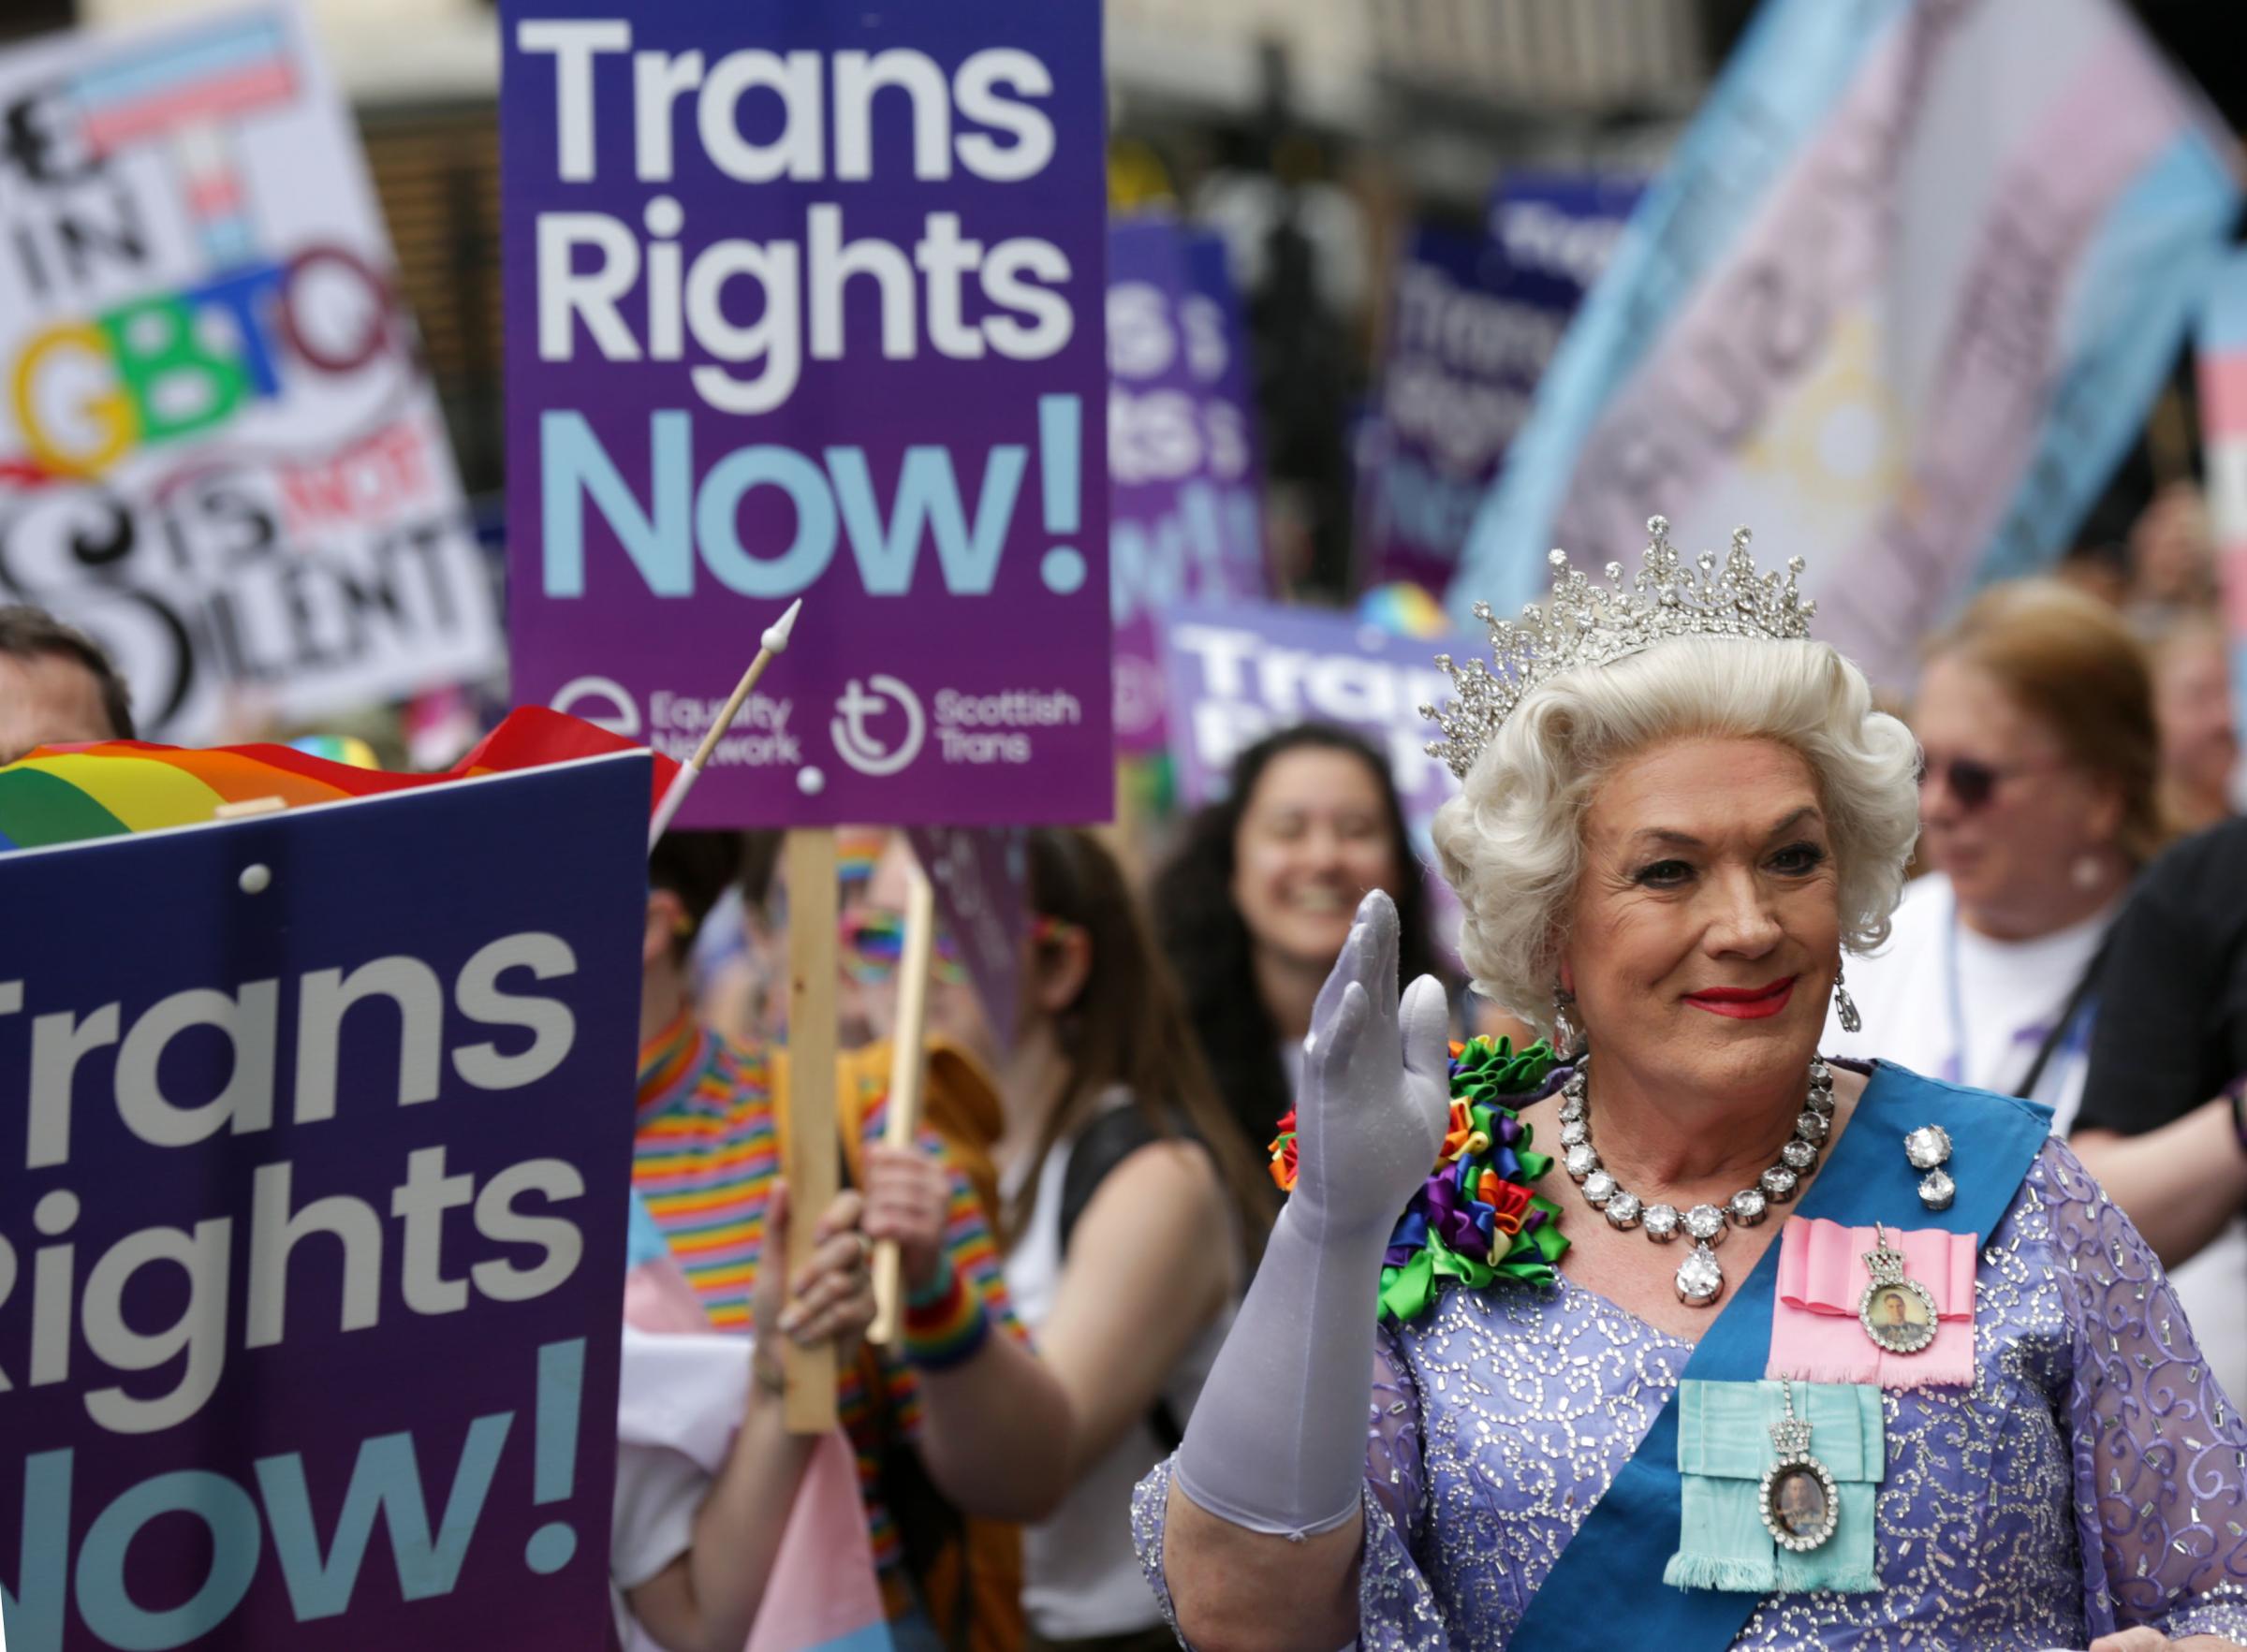 Stuart Waiton: Why is the state pushing harmful transgender agenda? |  HeraldScotland